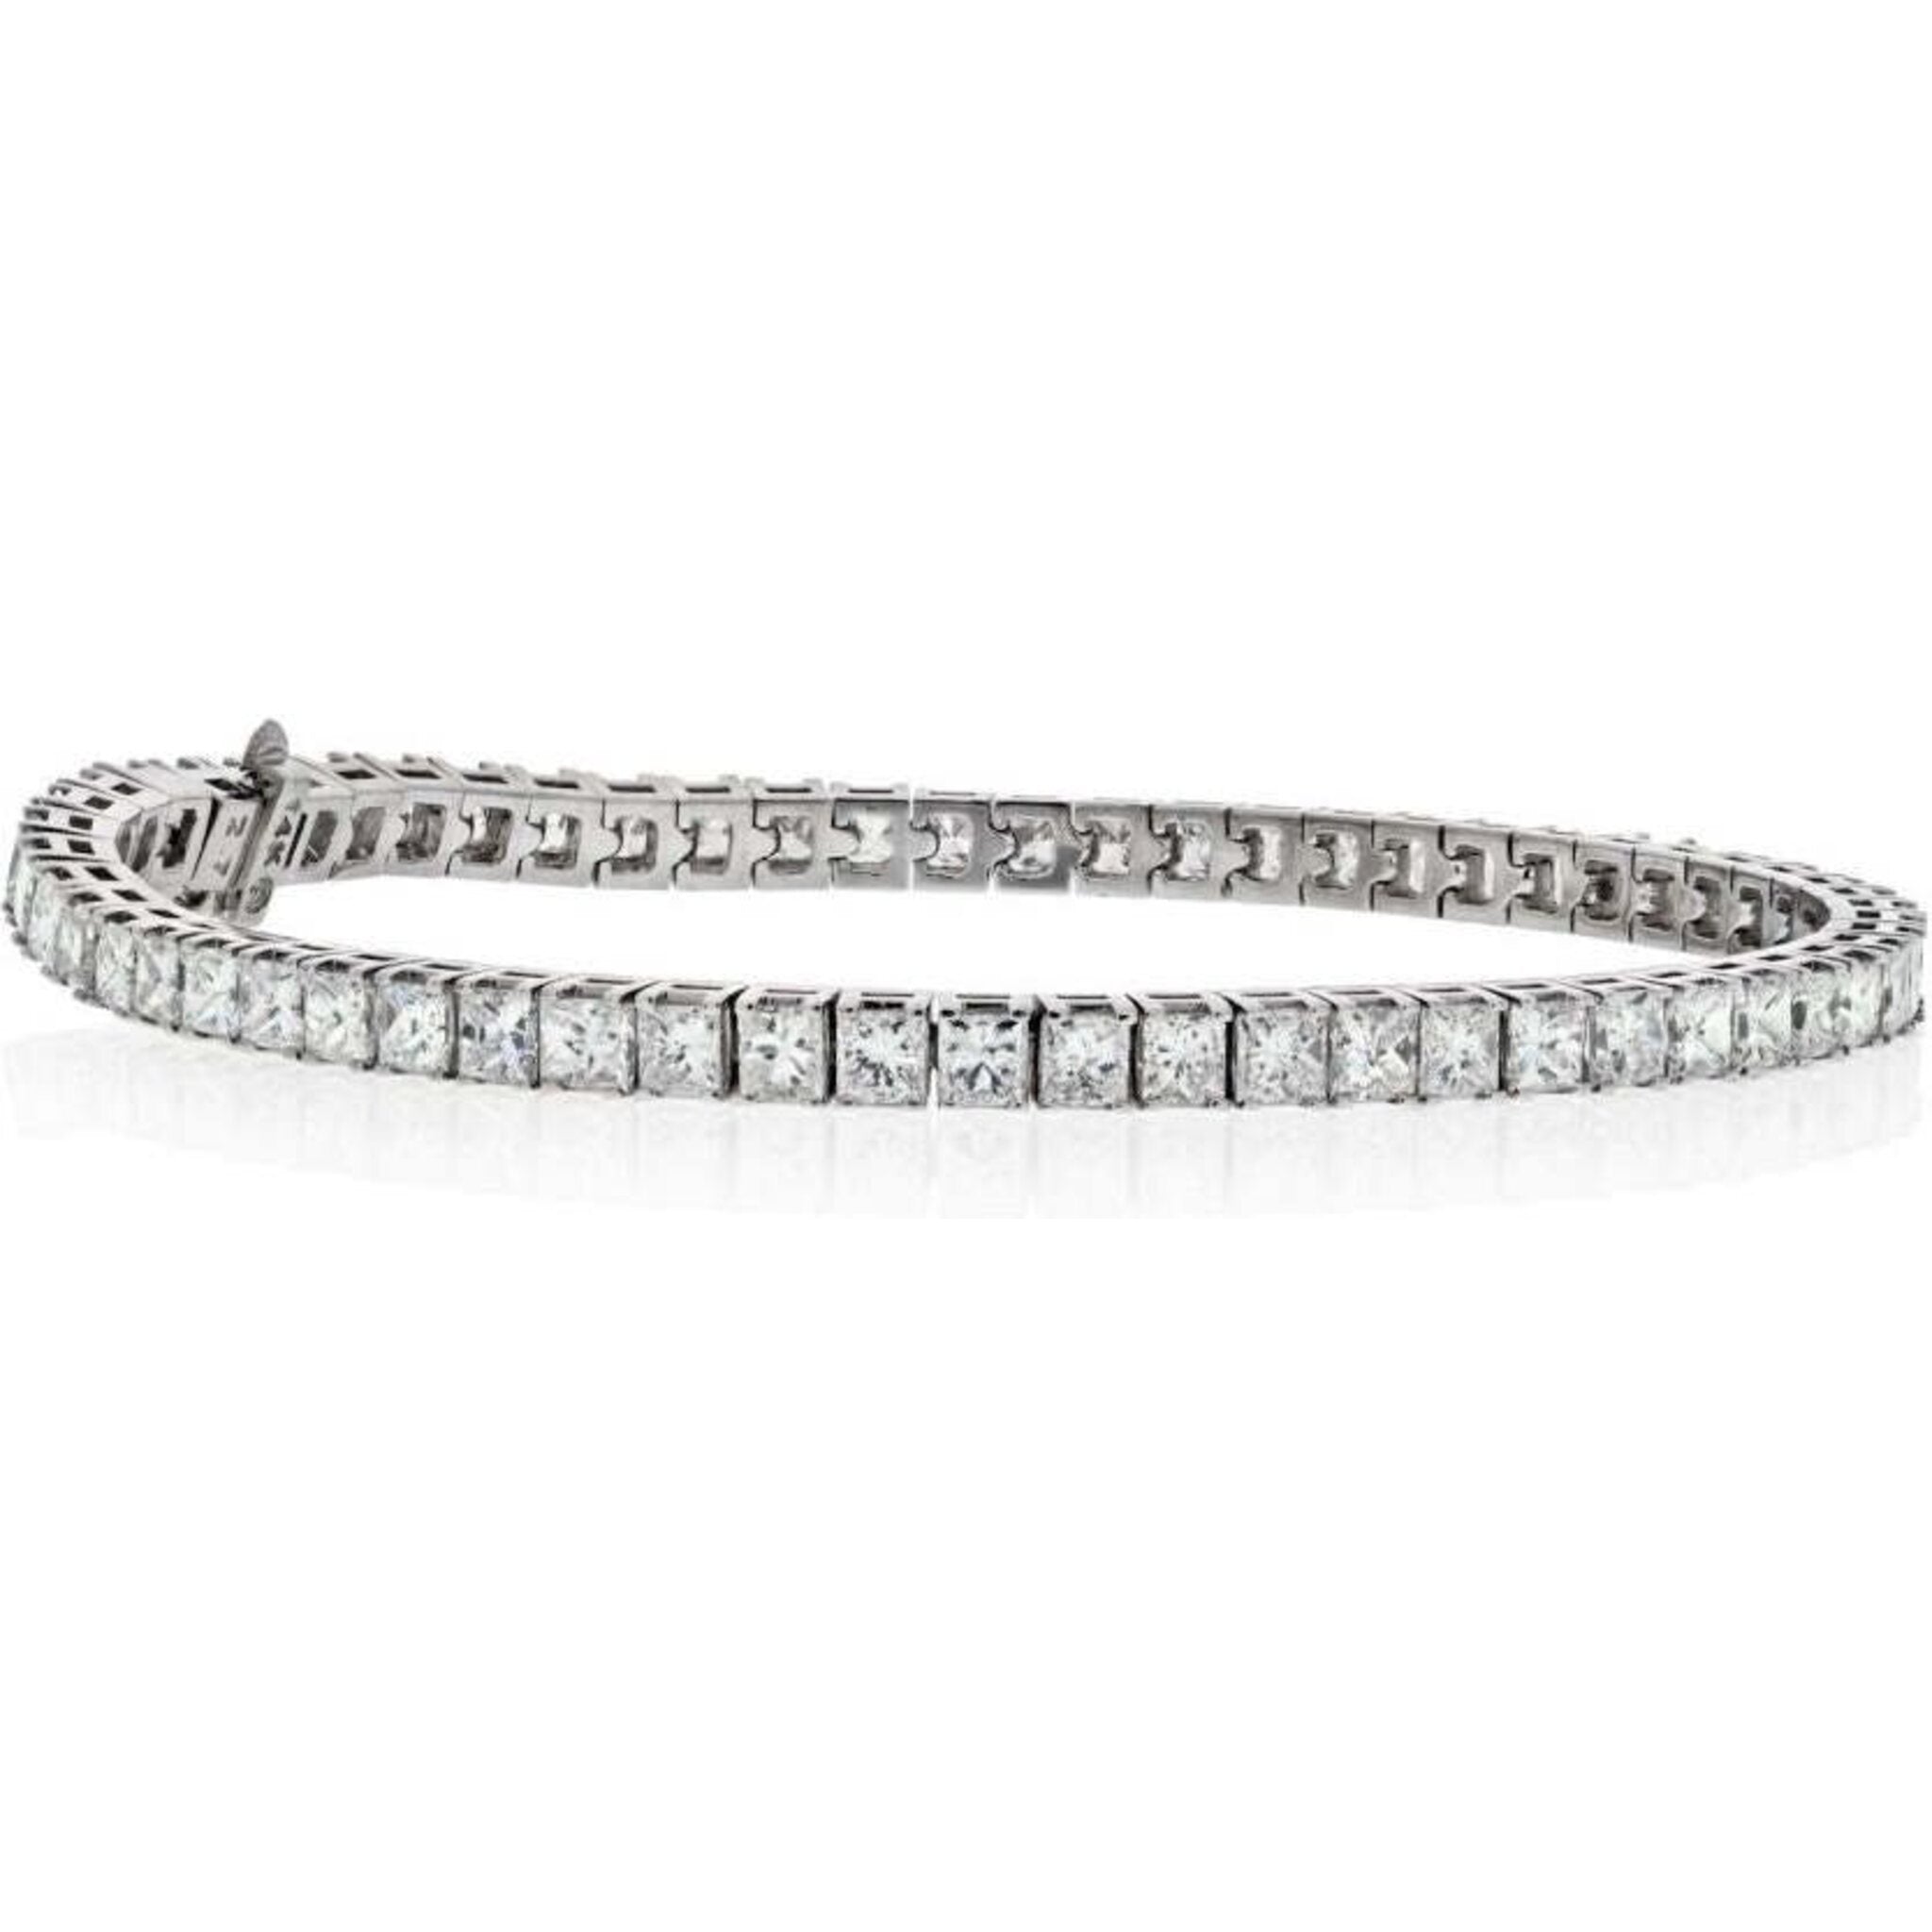 14K White Gold 7.00 Carat Princess Cut Diamond Tennis Bracelet